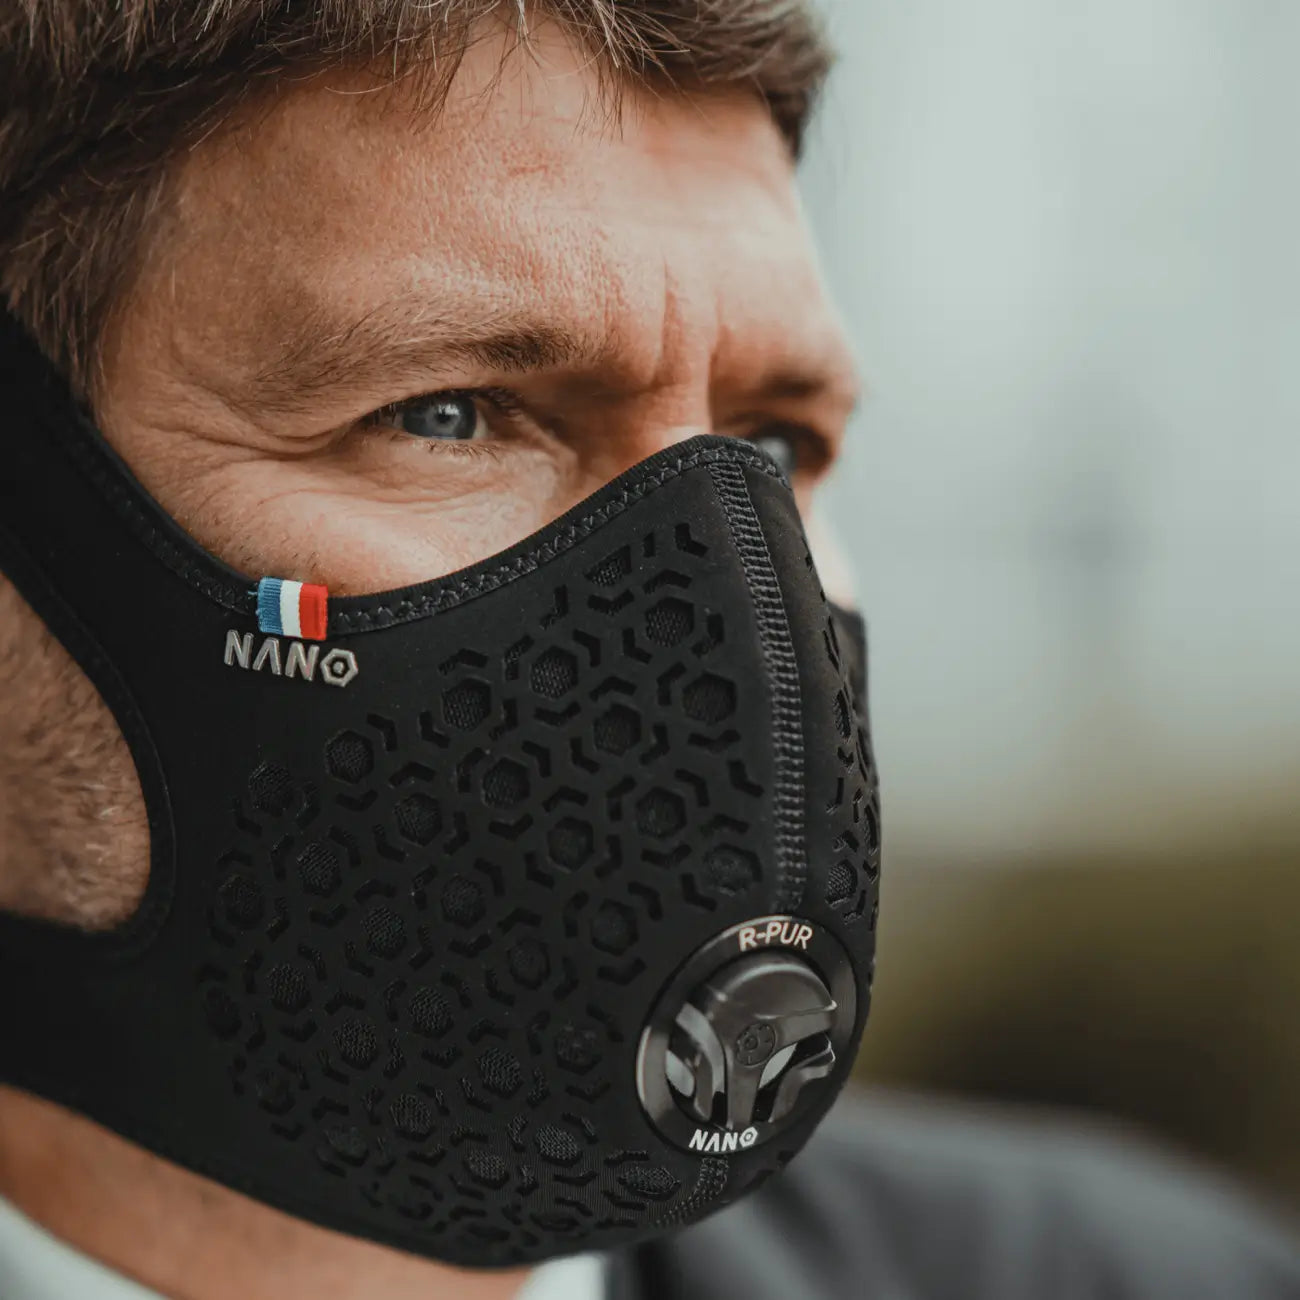 Nano One motorcycle mask